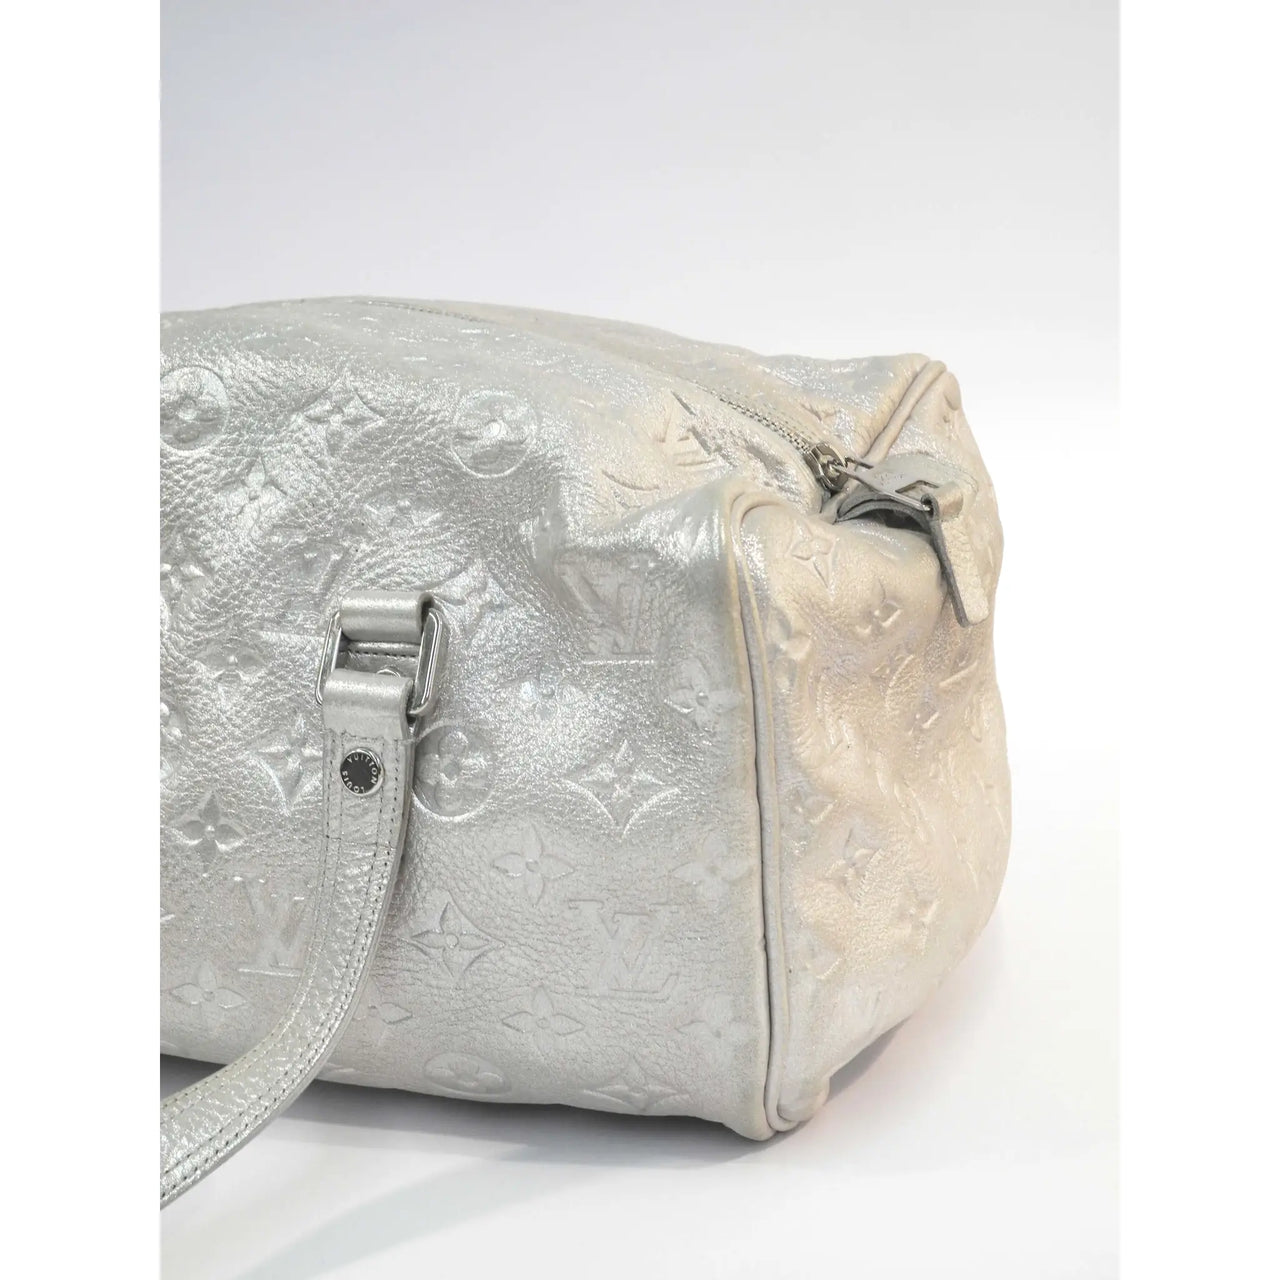 Louis Vuitton Monogram Mirror Sack Plastic Tote Bag Silver Patent